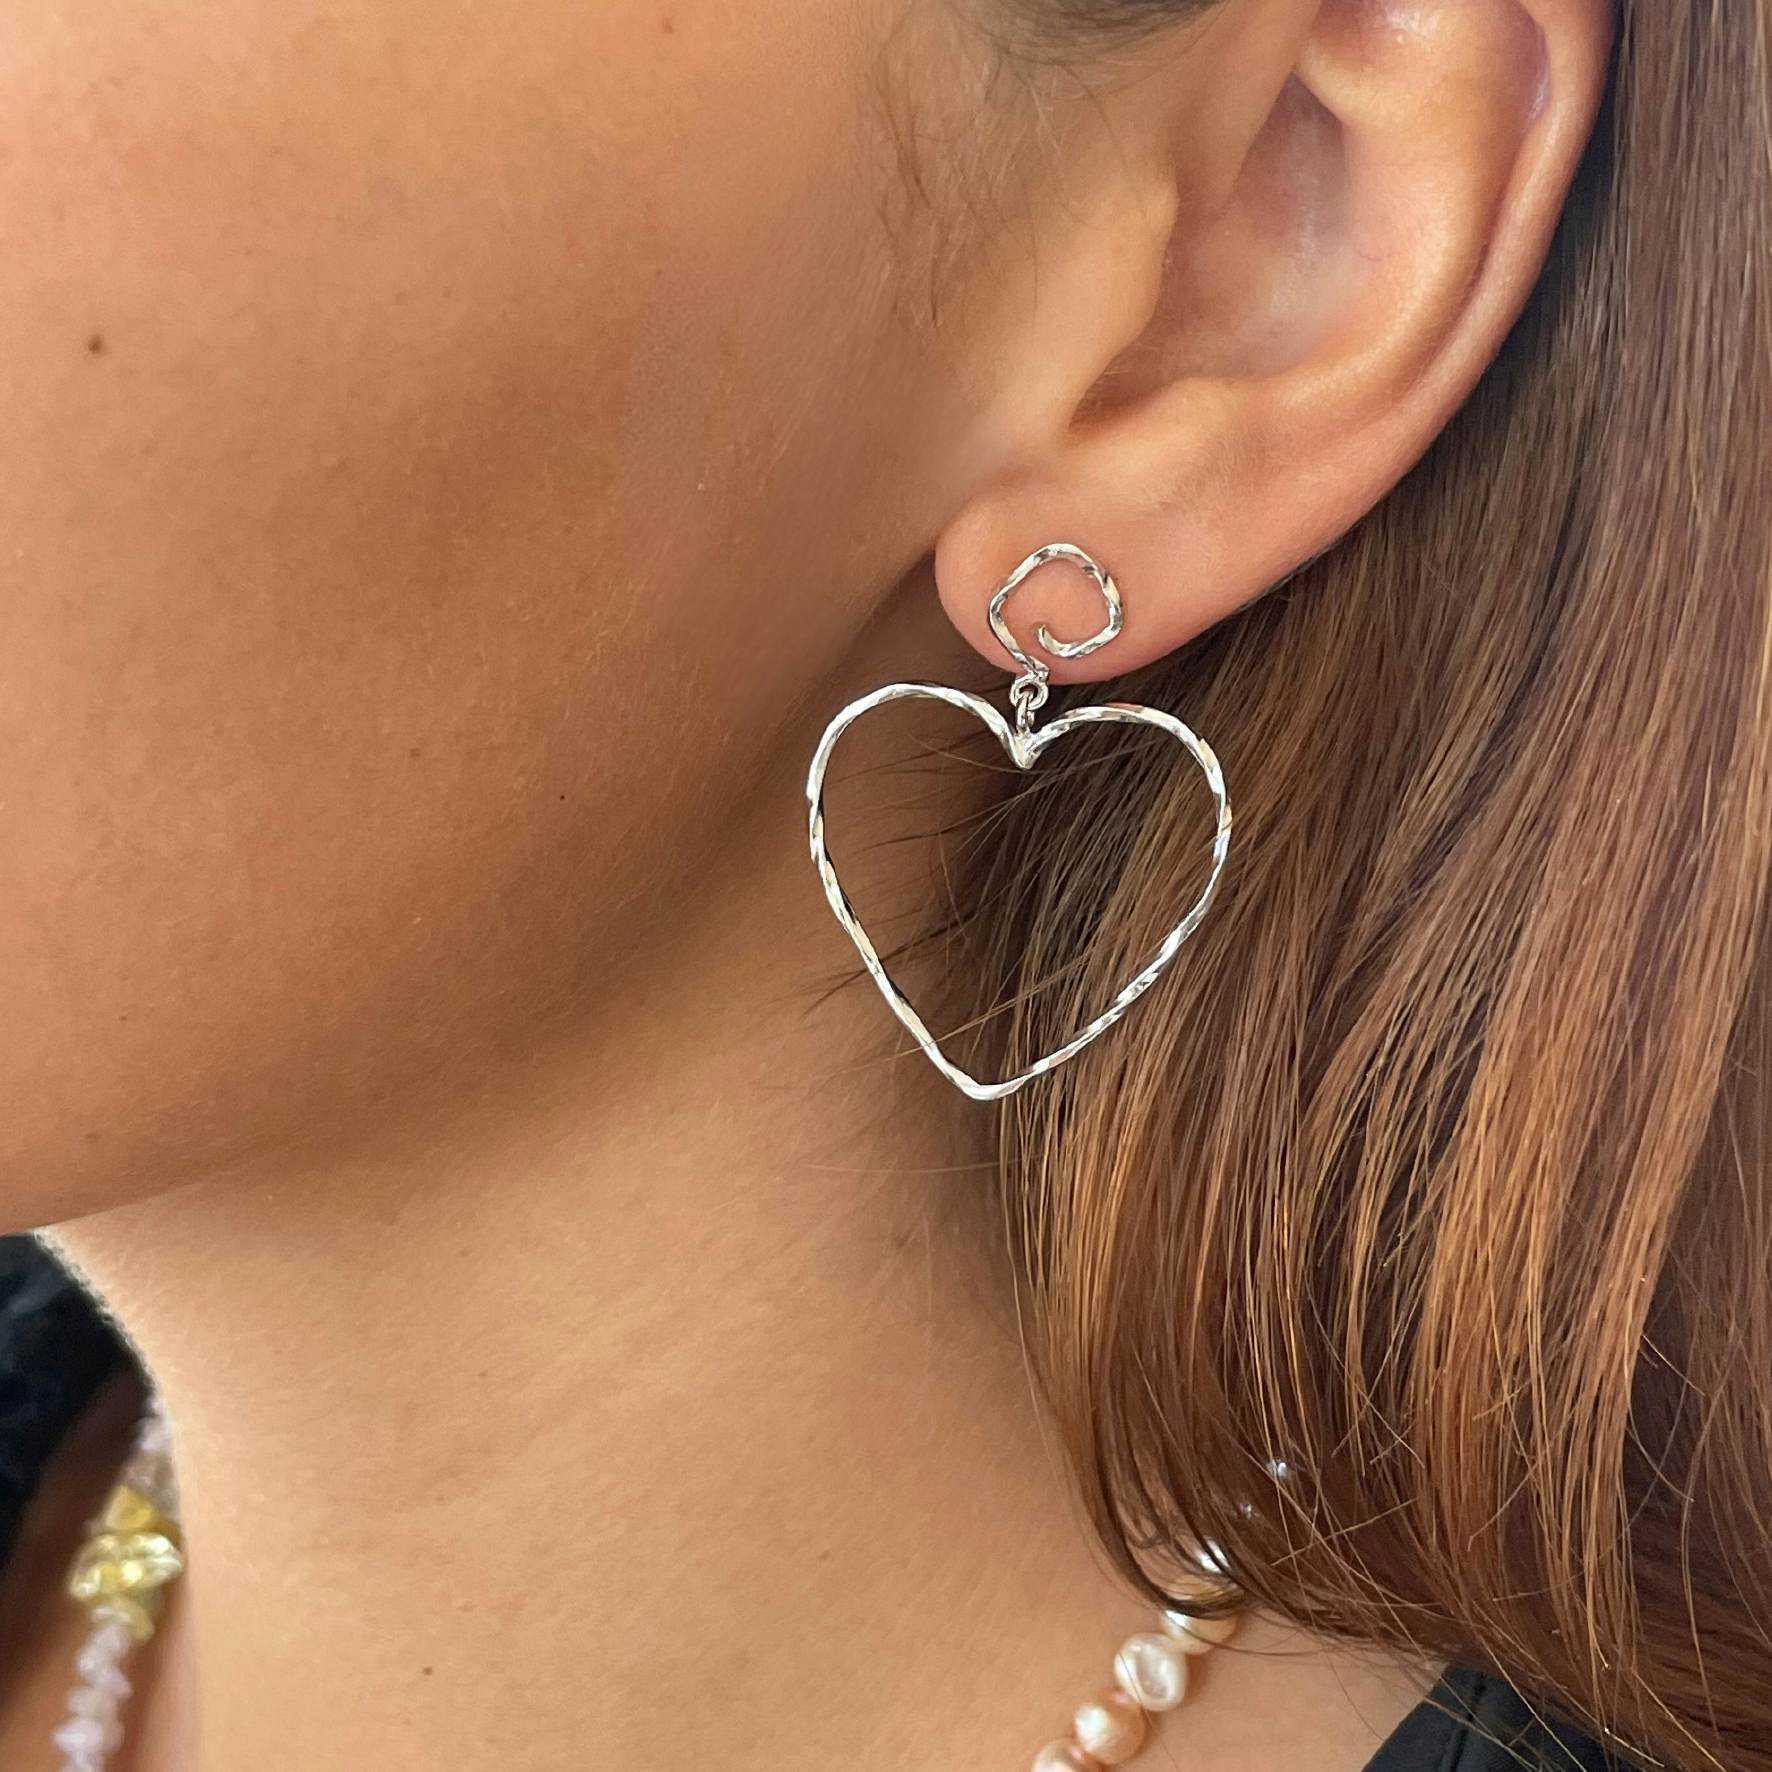 Funky Heart Earring fra STINE A Jewelry i Sølv Sterling 925